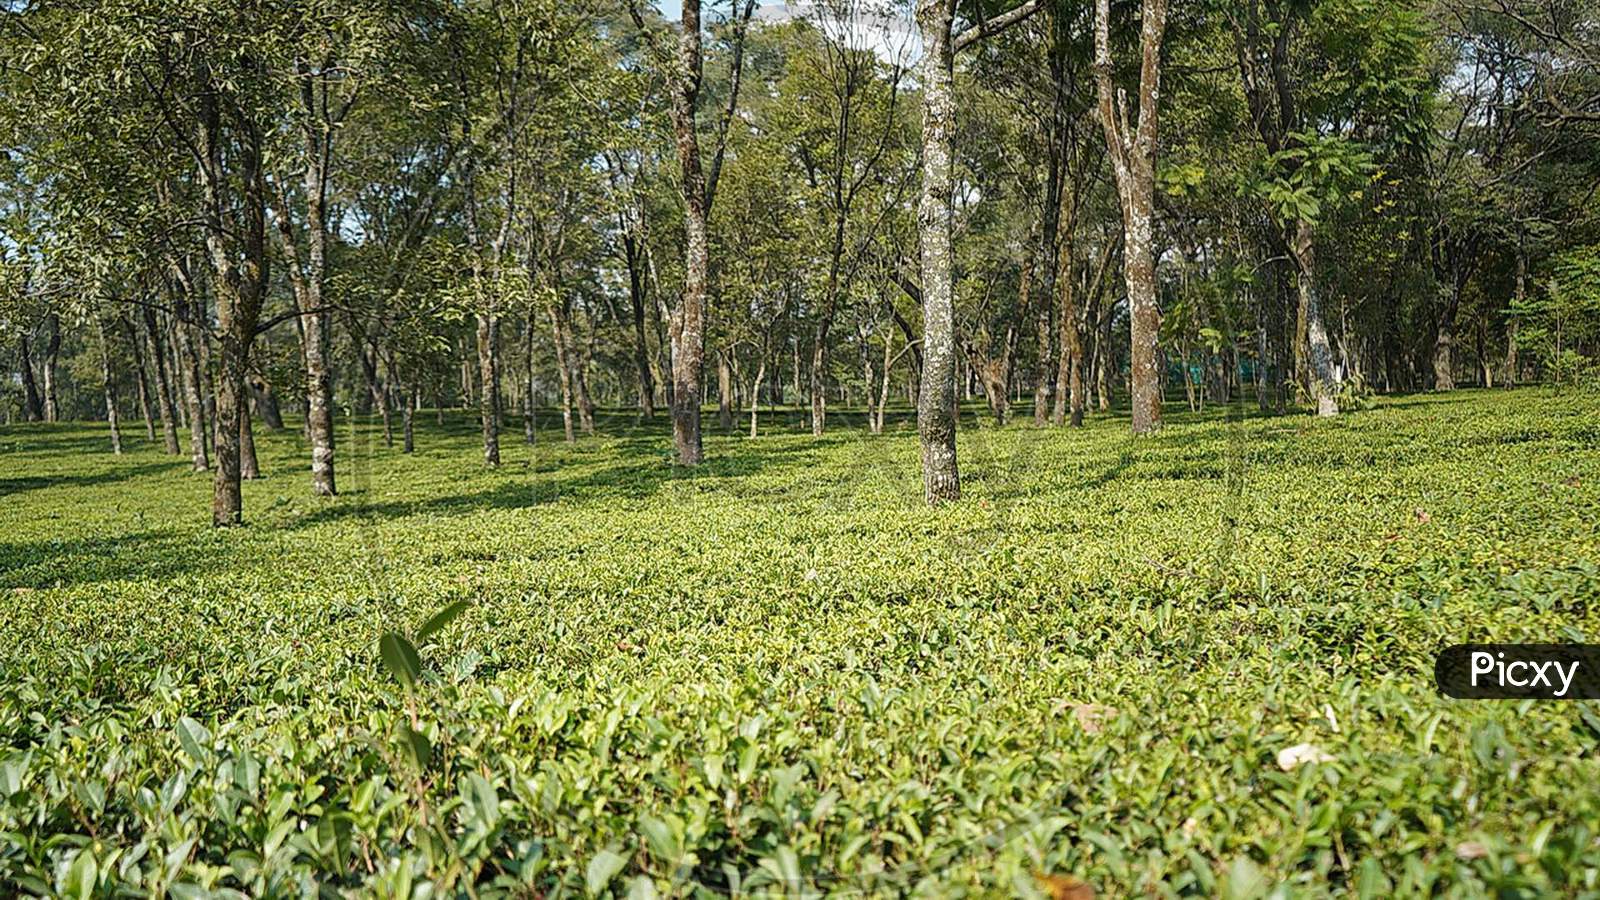 A view of tea garden in Palampur Himachal Pradesh.